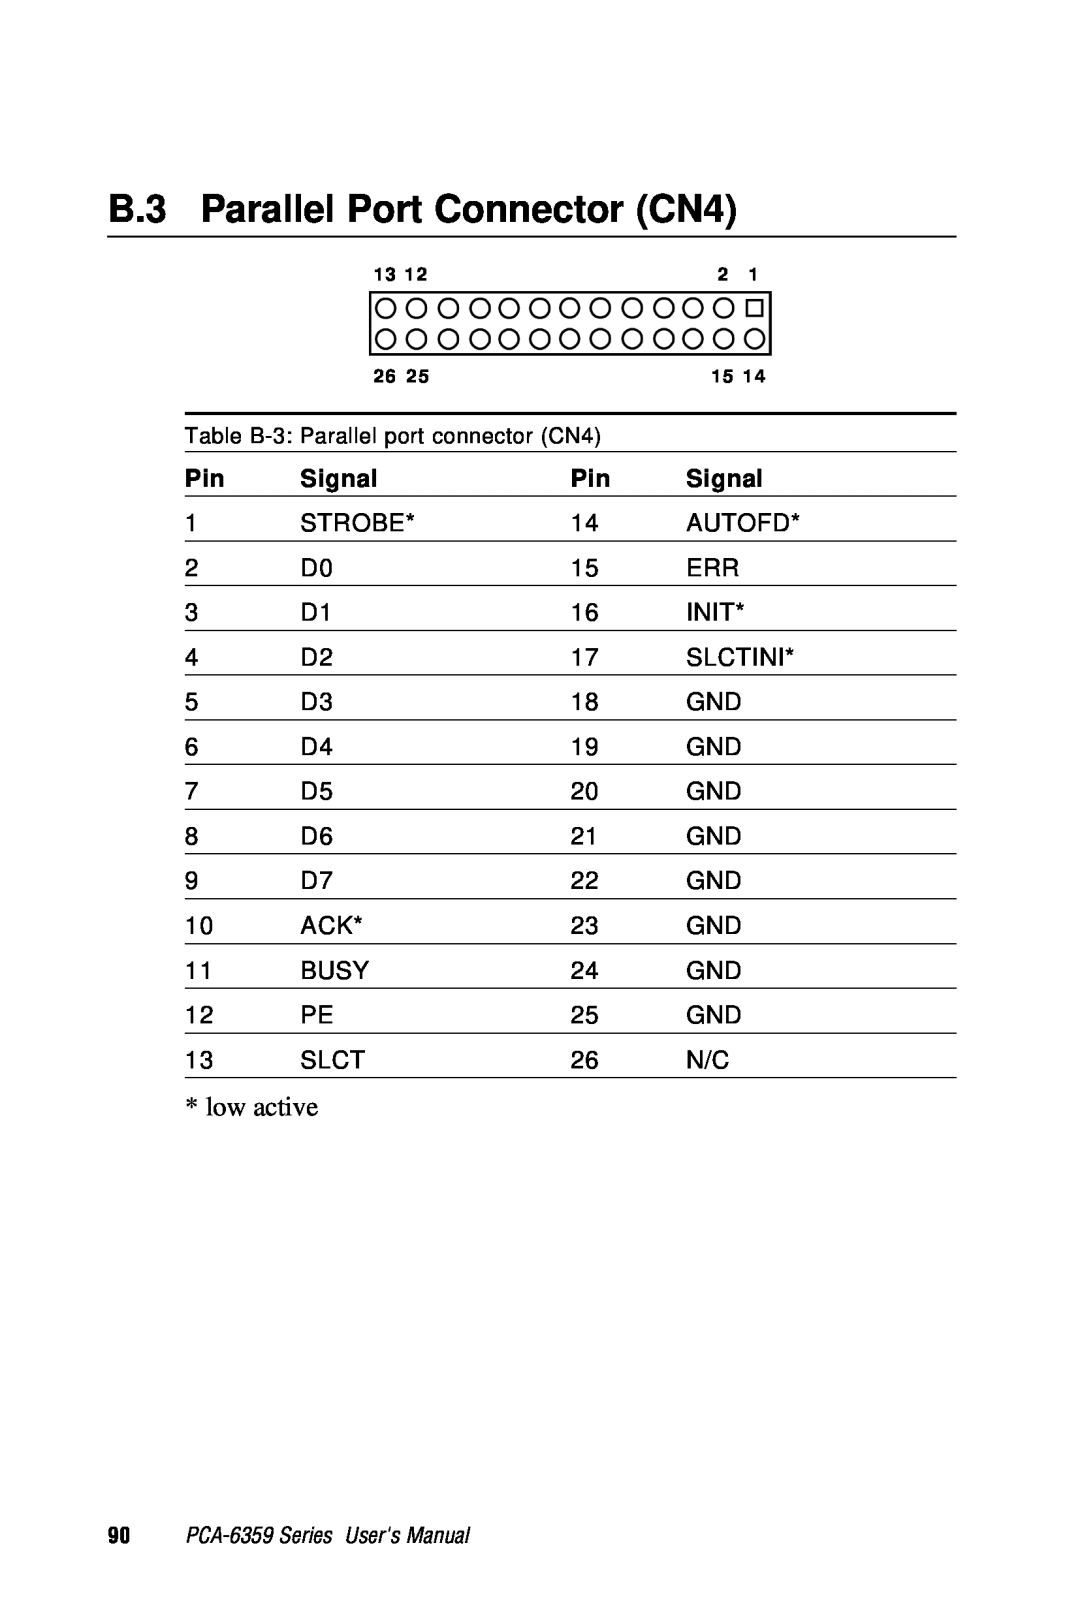 Advantech PCA-6359 user manual B.3 Parallel Port Connector CN4, Table B-3 Parallel port connector CN4 